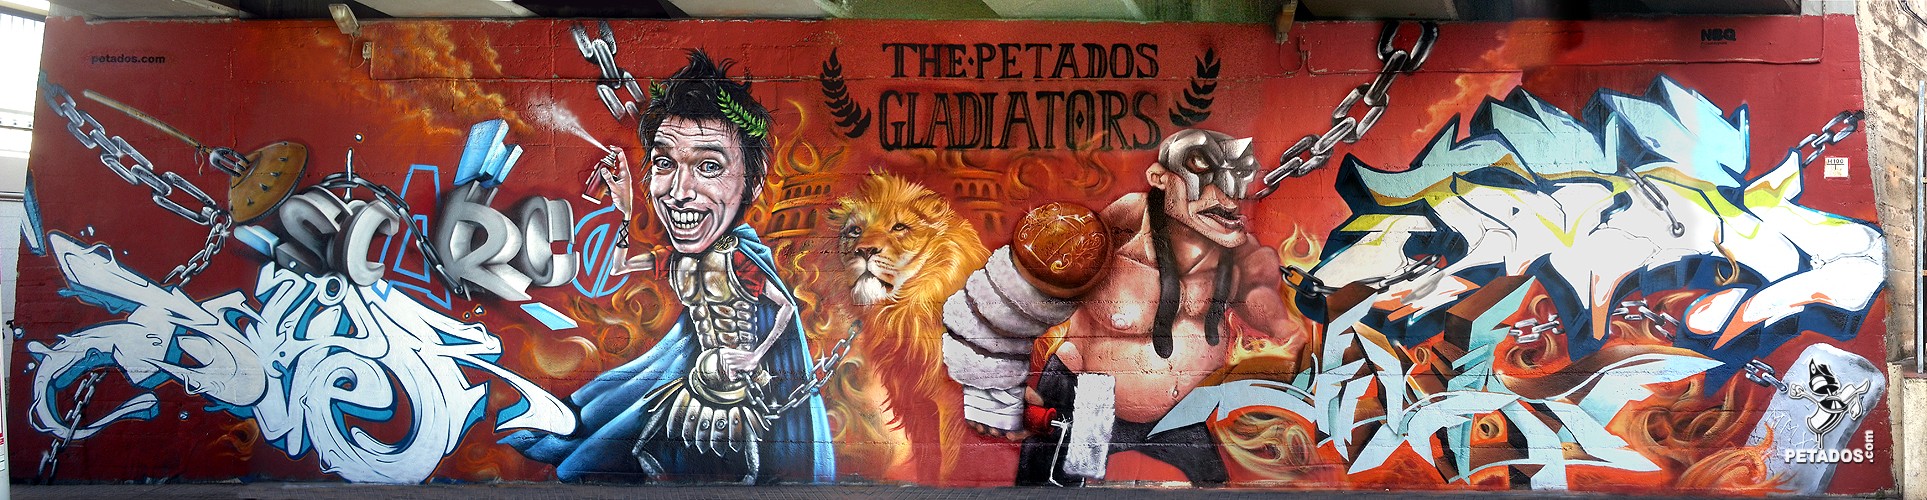 THE PETADOS GLADIATORS – Rubí (Spain). 2013 Copyright [Espray]